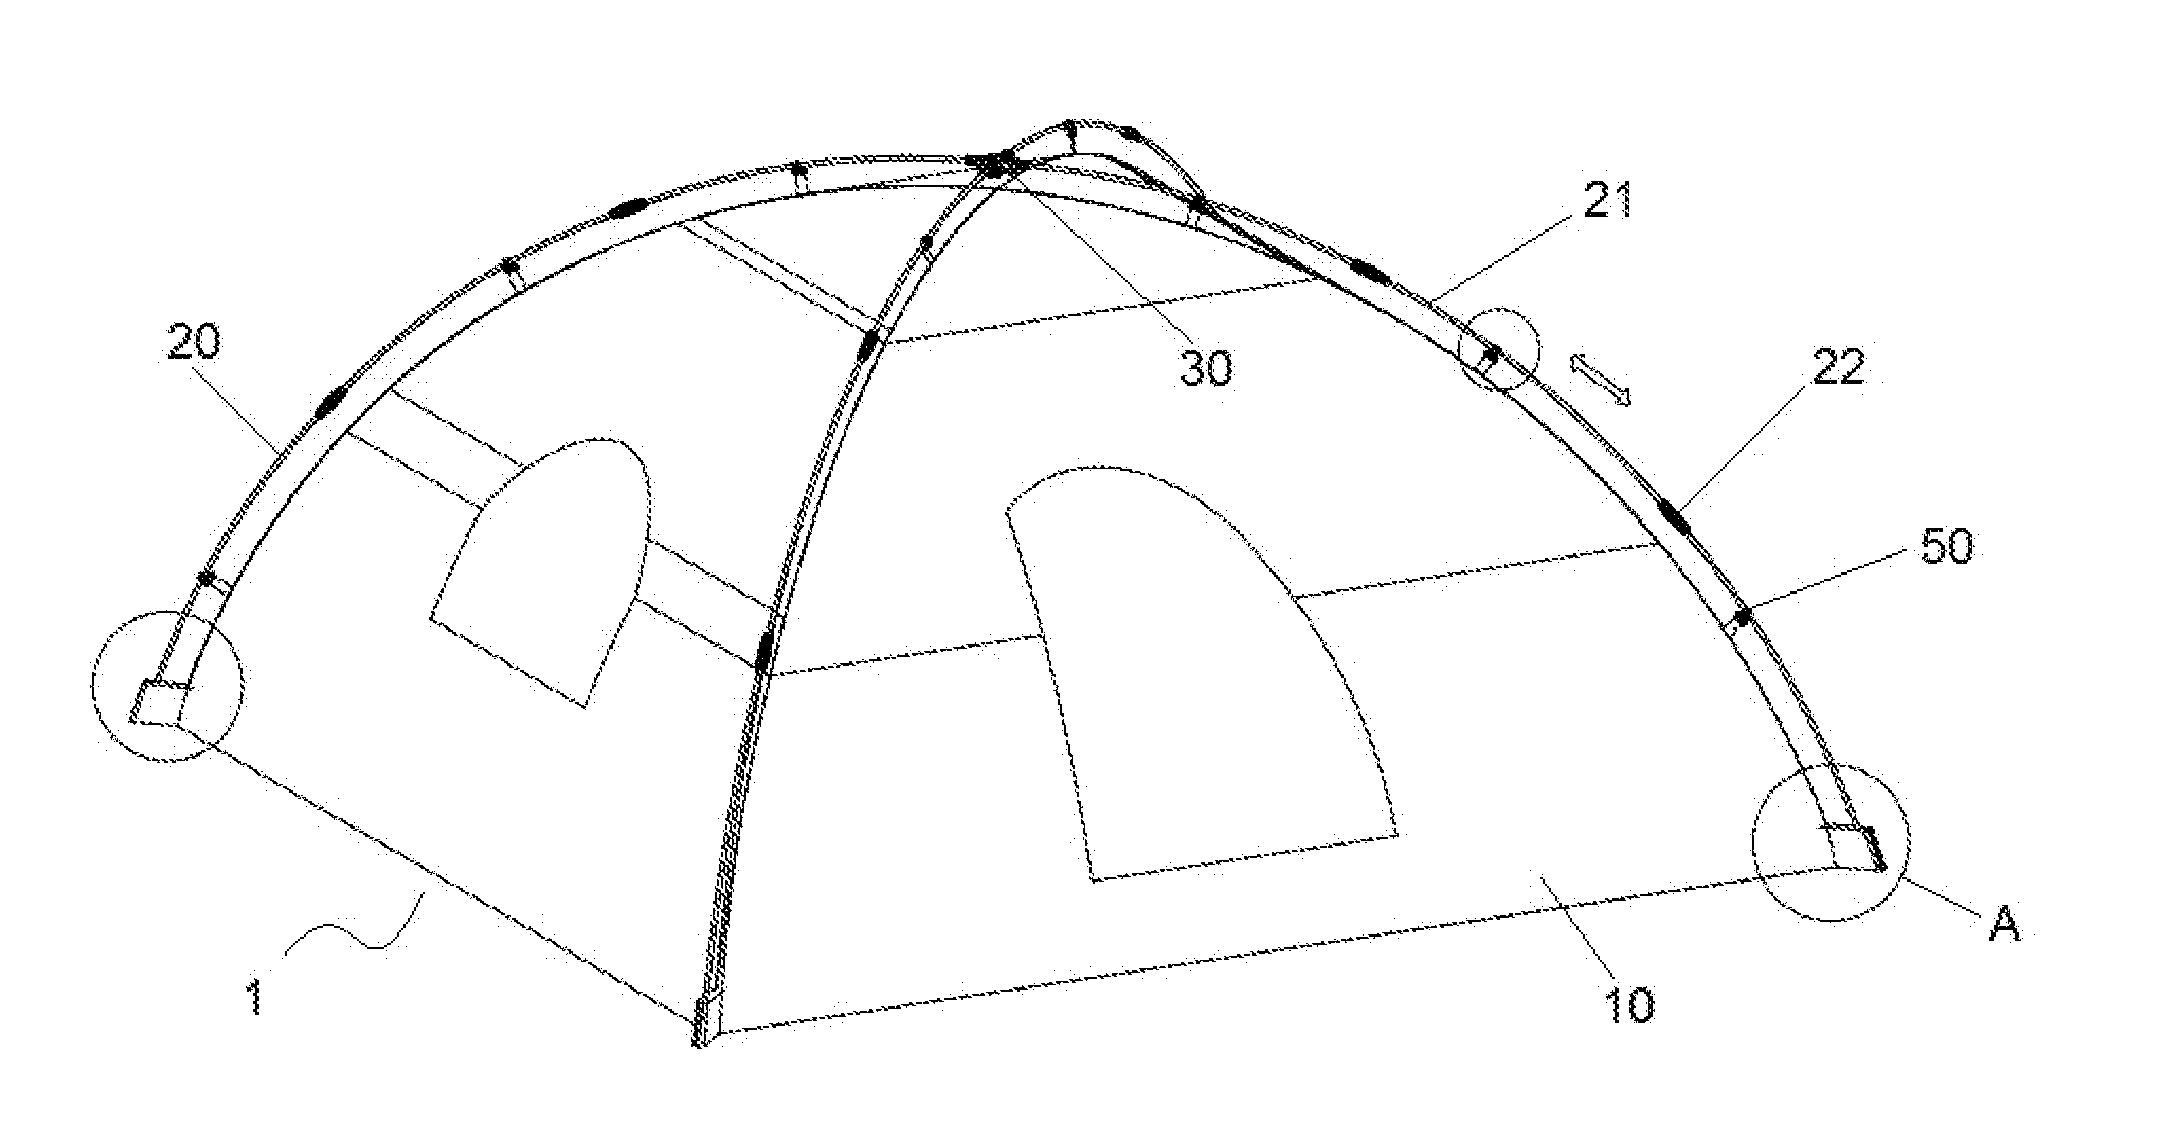 Foldable tent